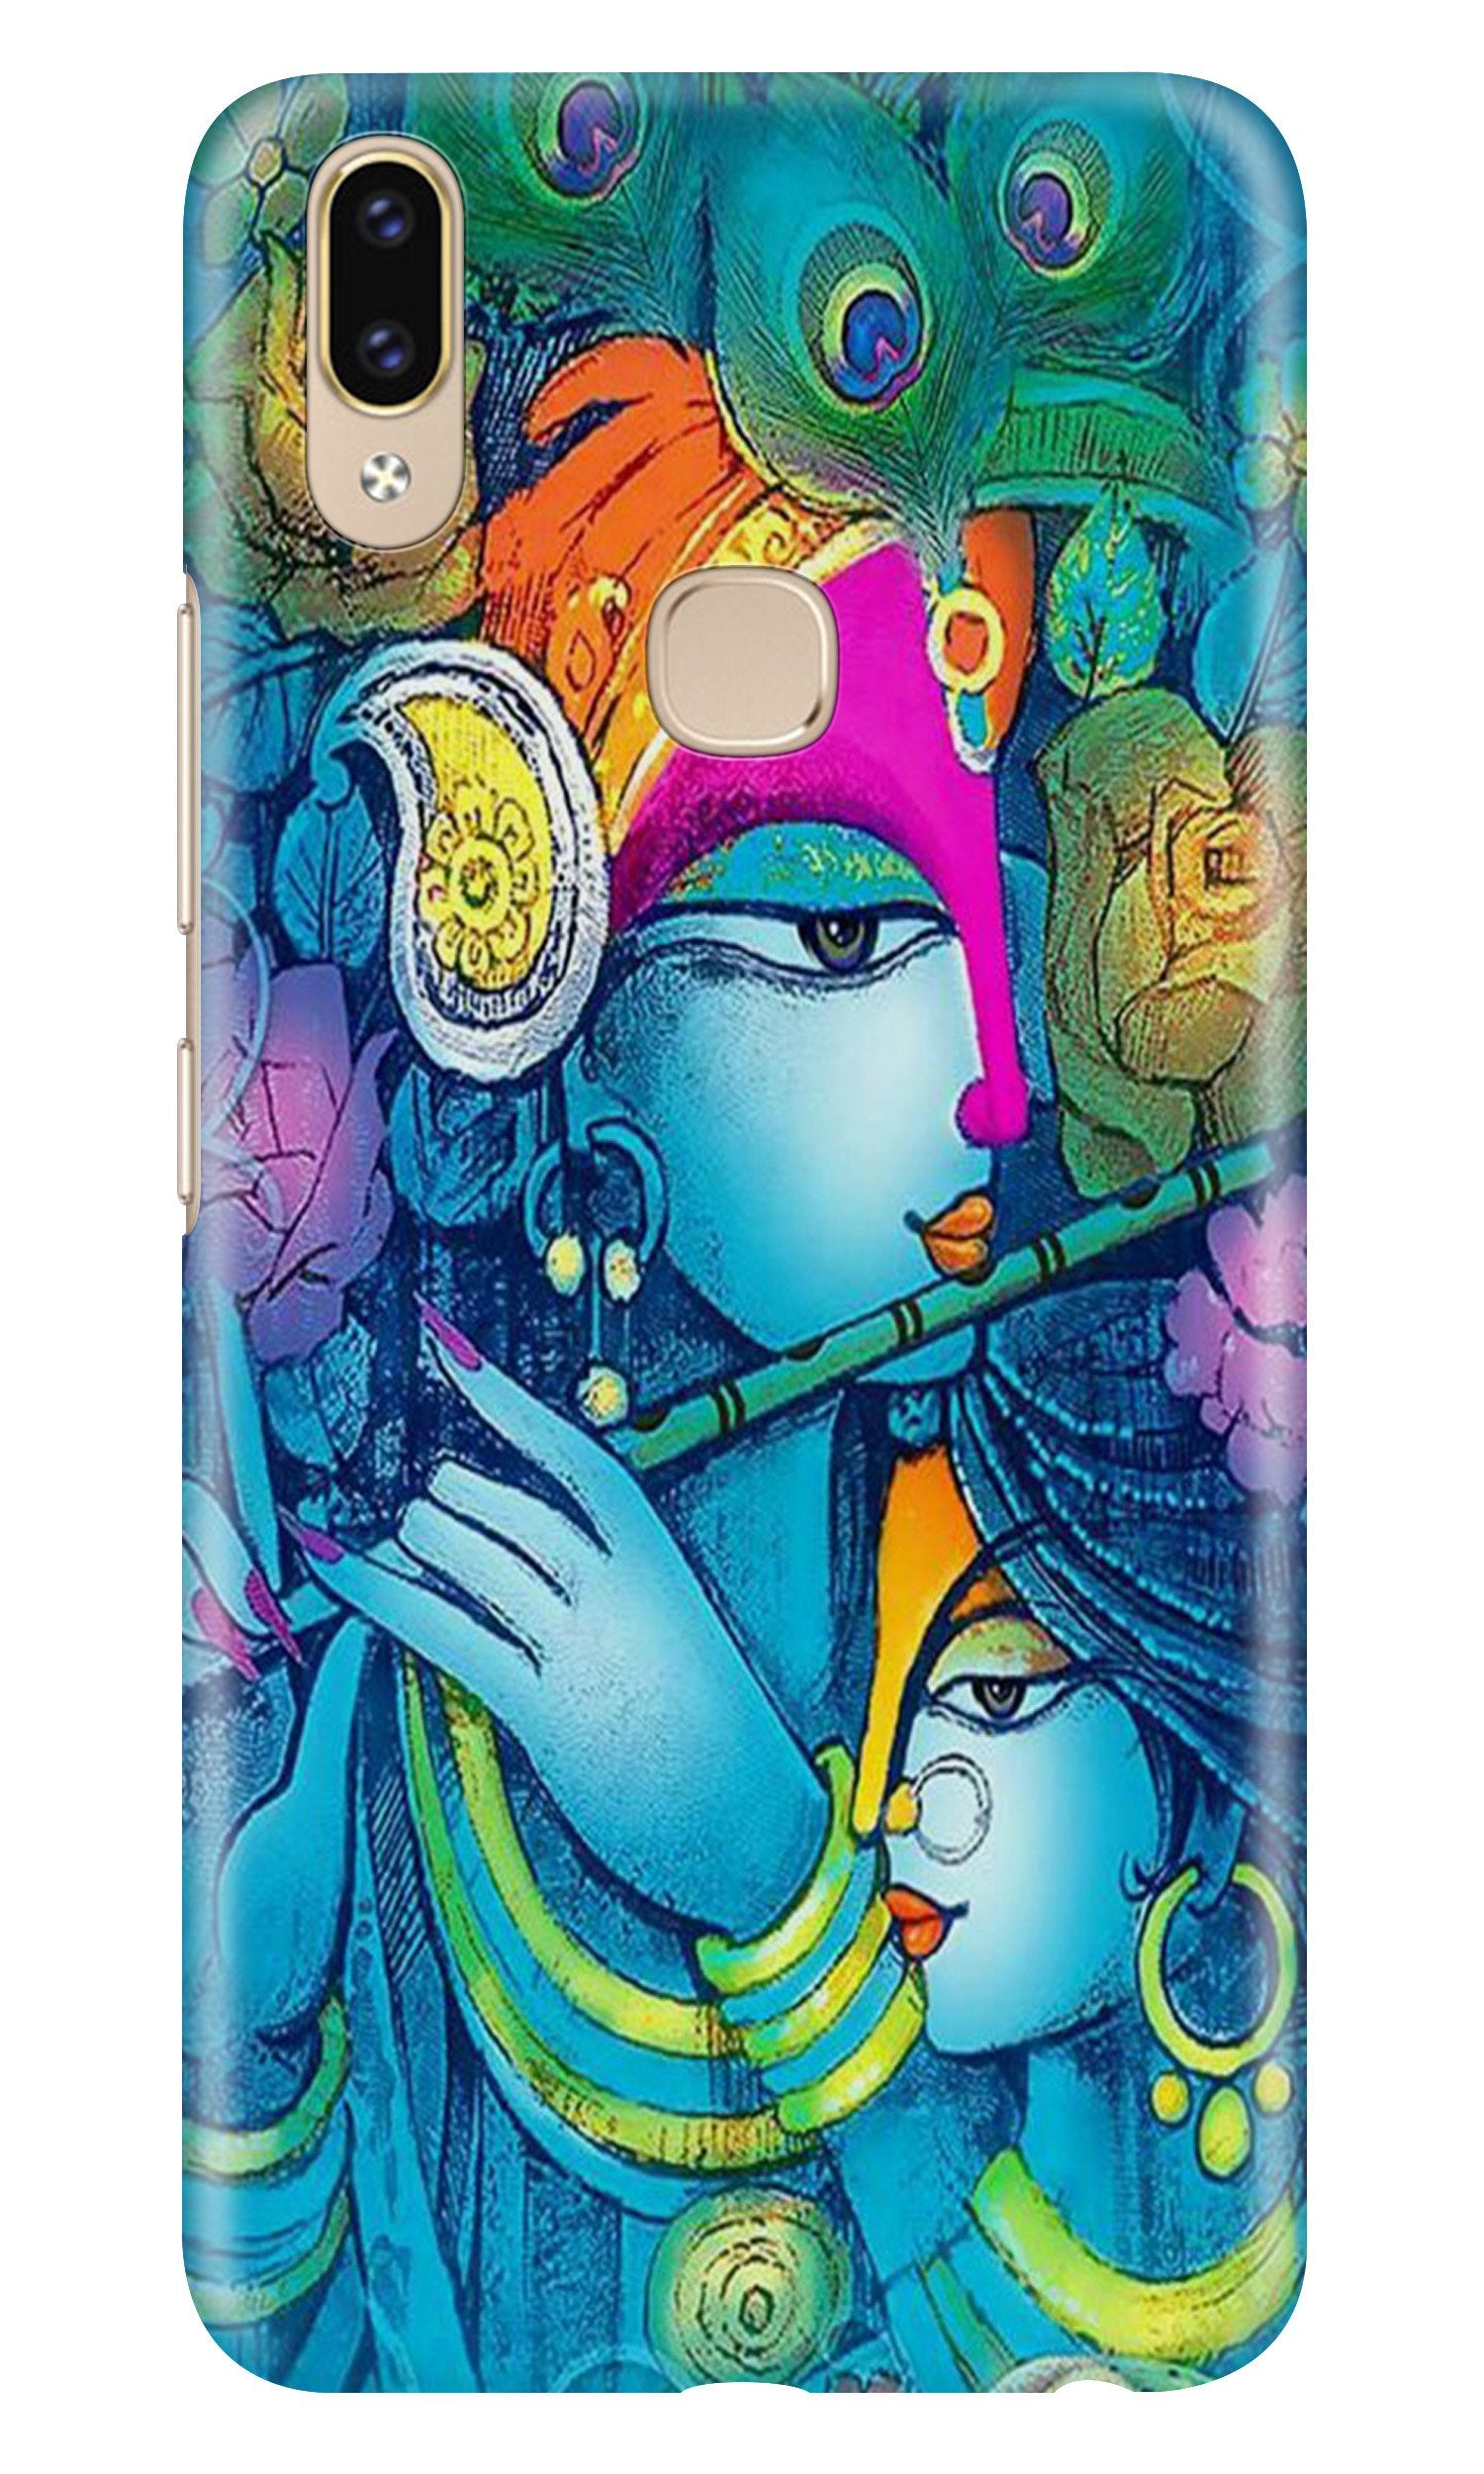 Radha Krishna Case for Asus Zenfone Max Pro M2 (Design No. 288)